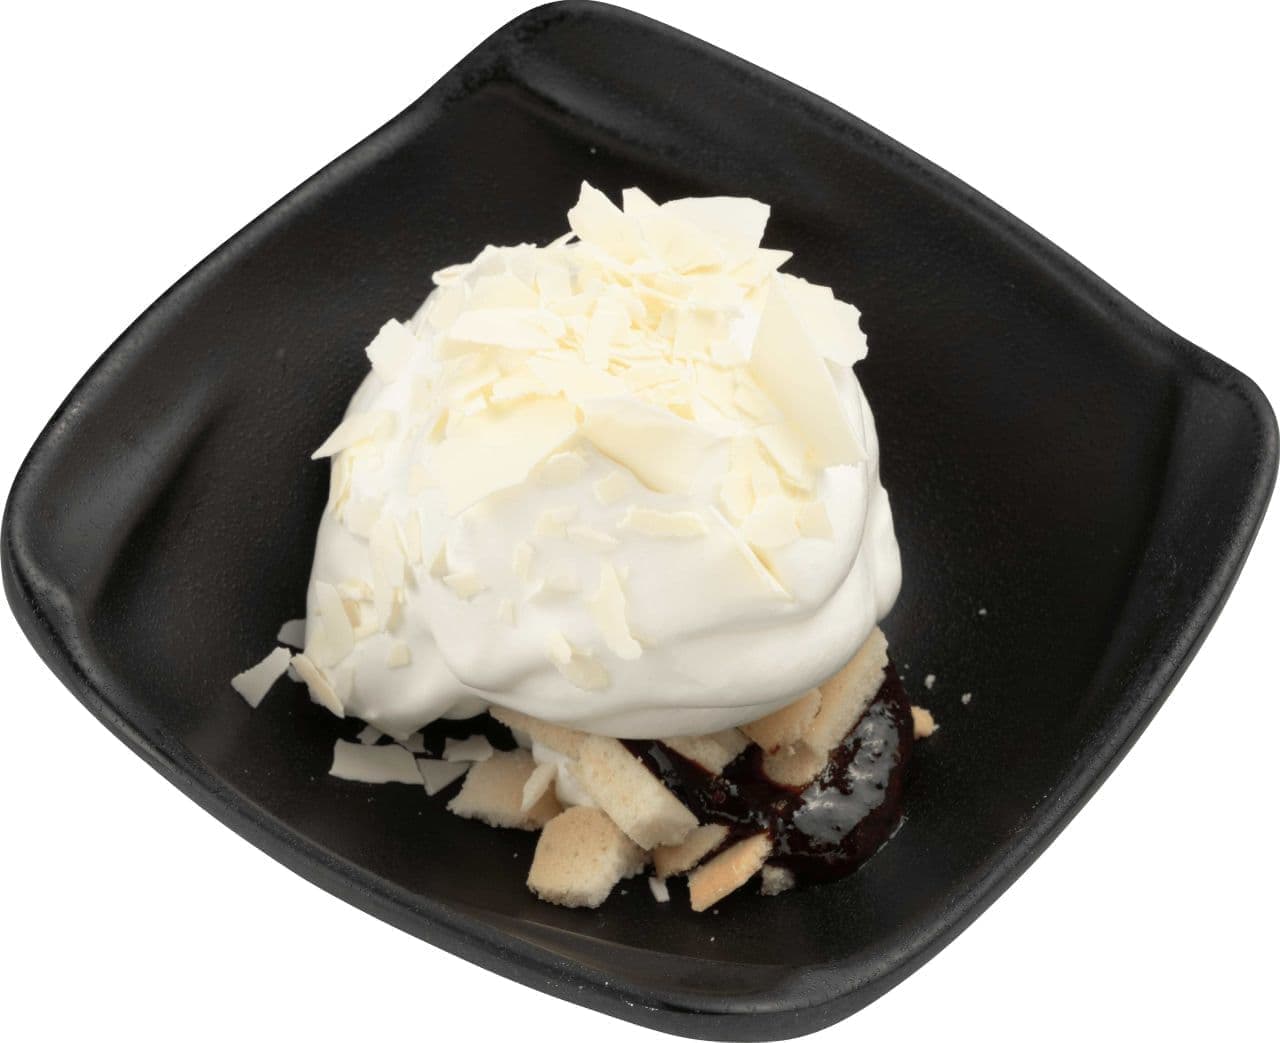 Kappa Sushi "Drown Hokkaido Condensed Milk Whipped Cream Cake".